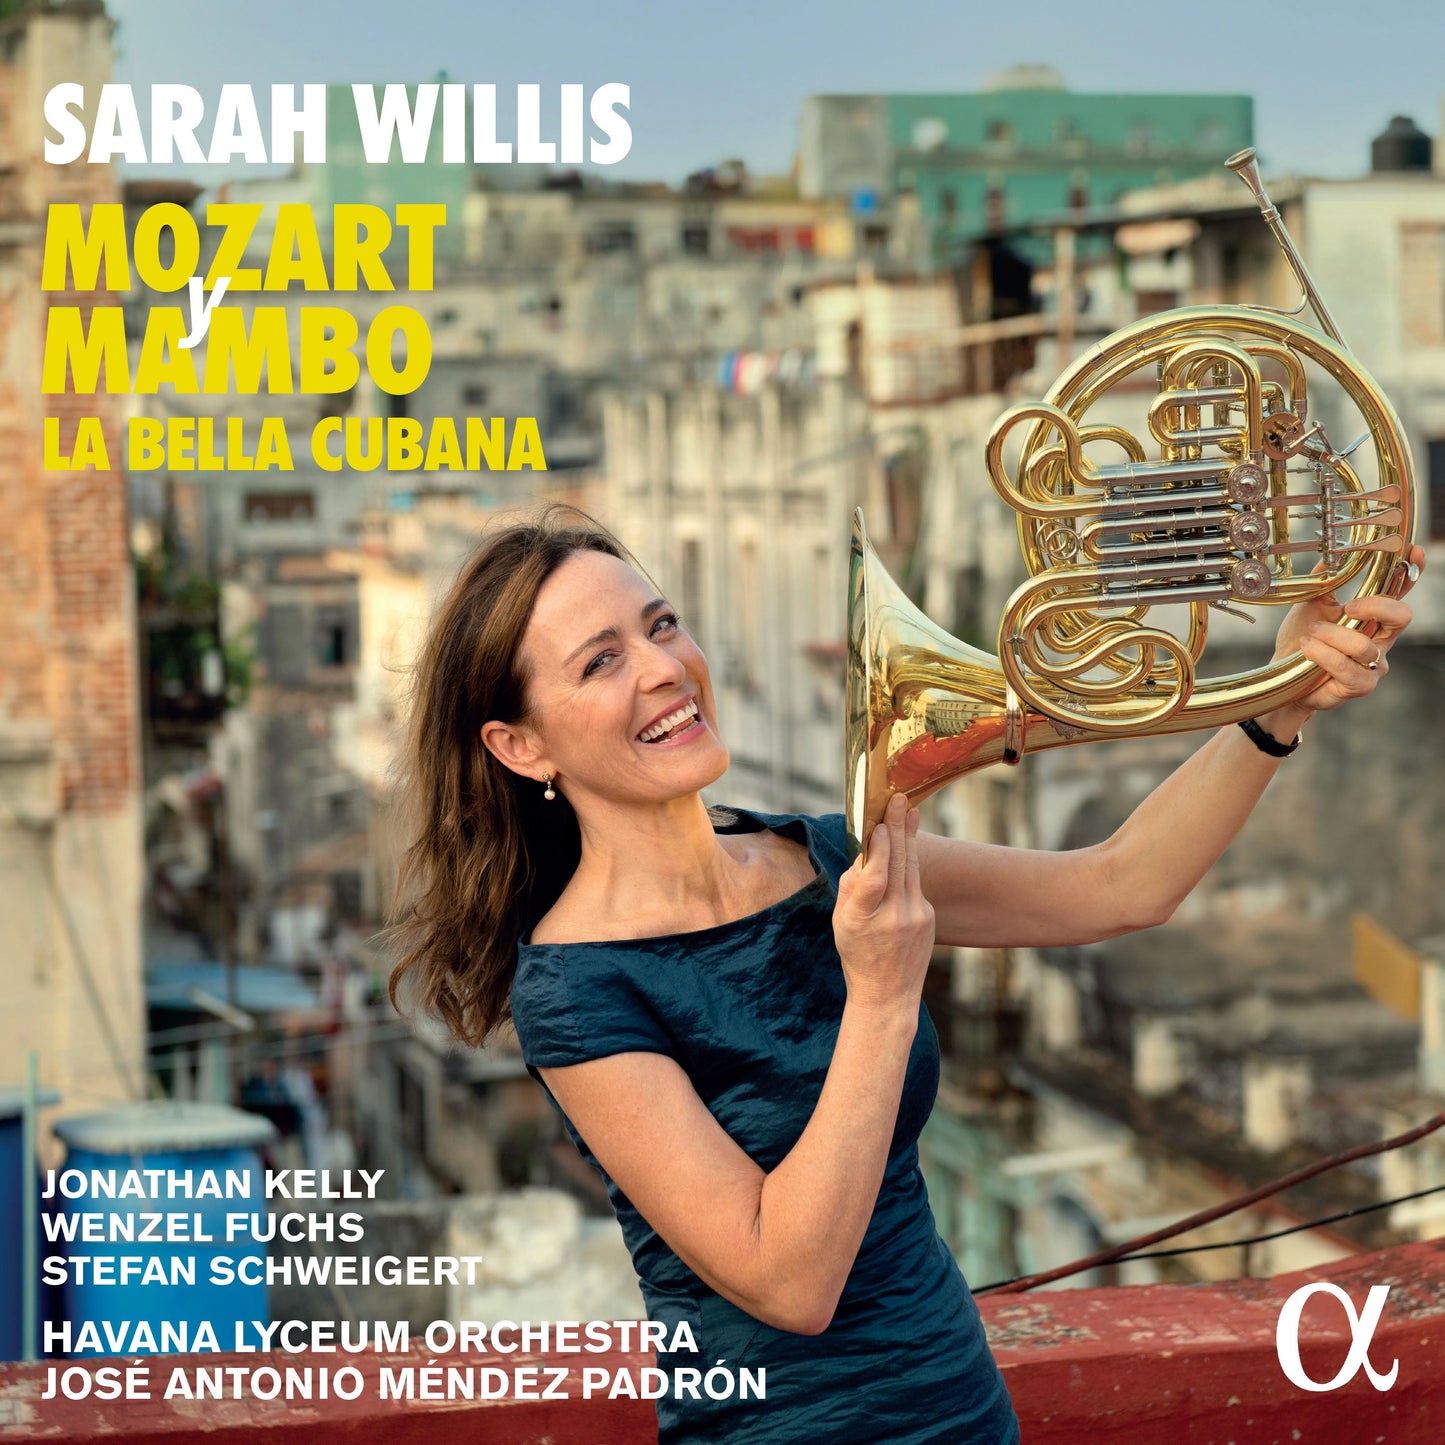 Mozart Y Mambo - La Bella Cubana / Sarah Willis